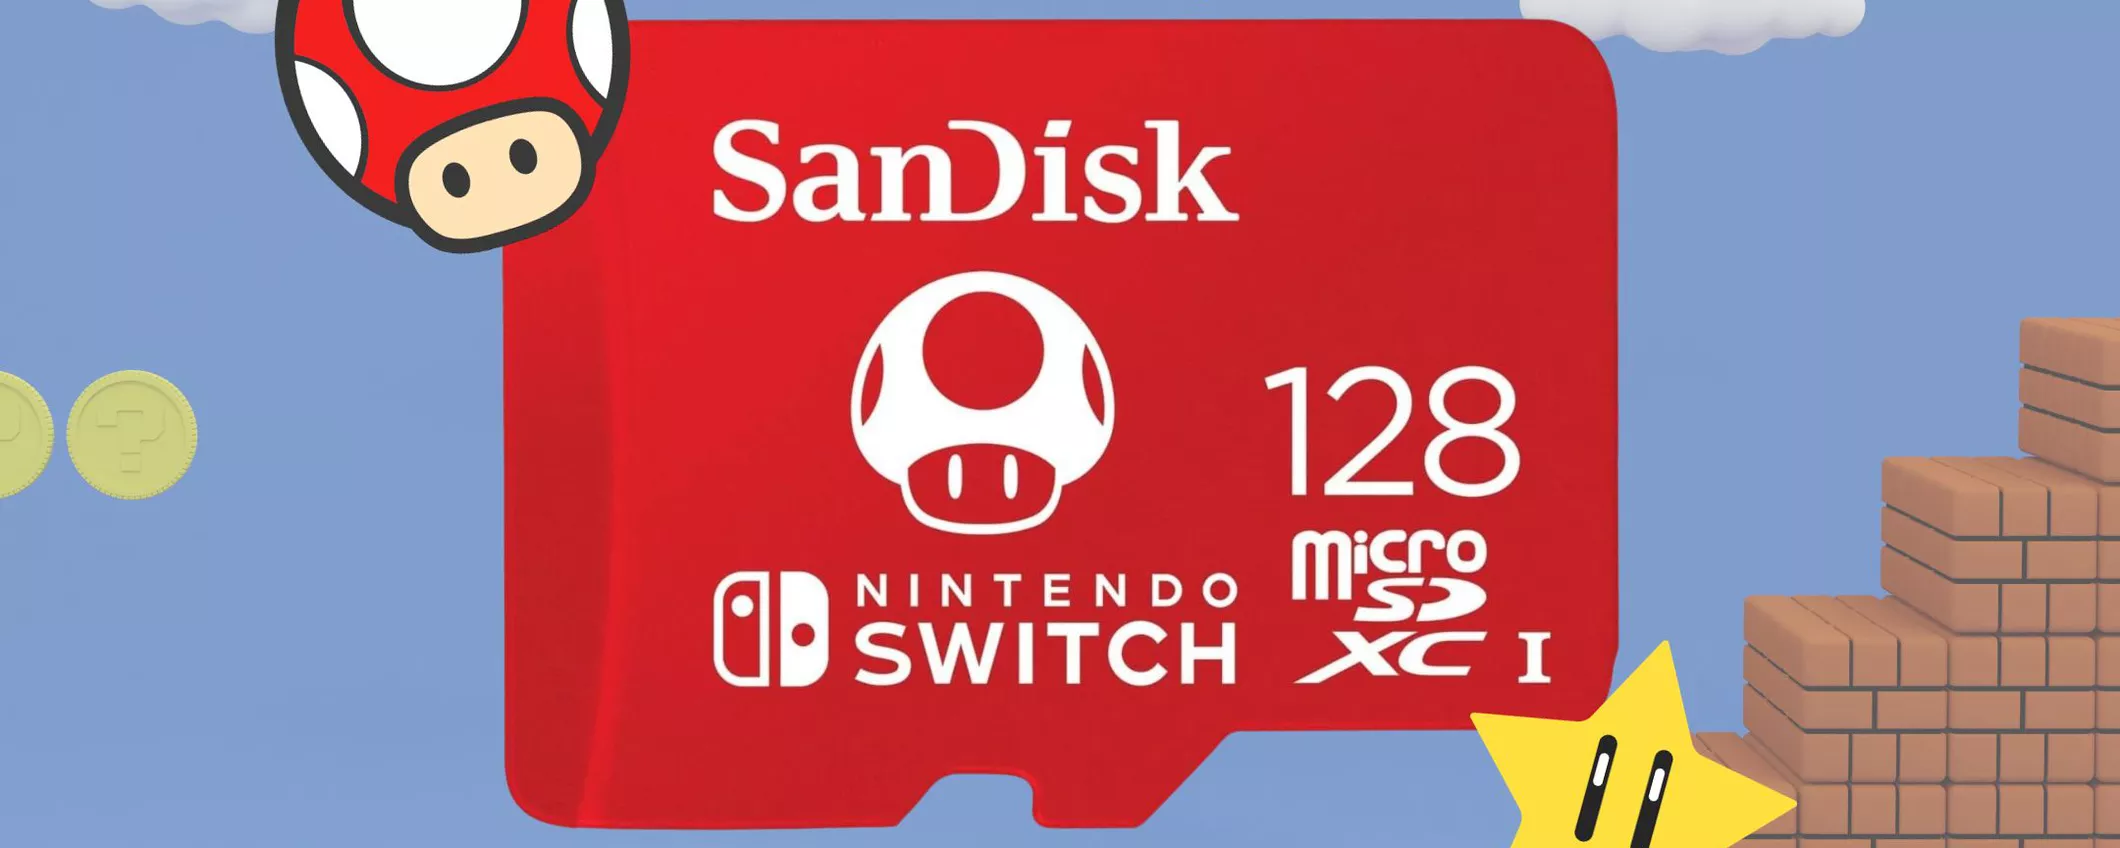 SanDisk 128GB per Nintendo Switch: Indispensabile per Ogni Gamer!